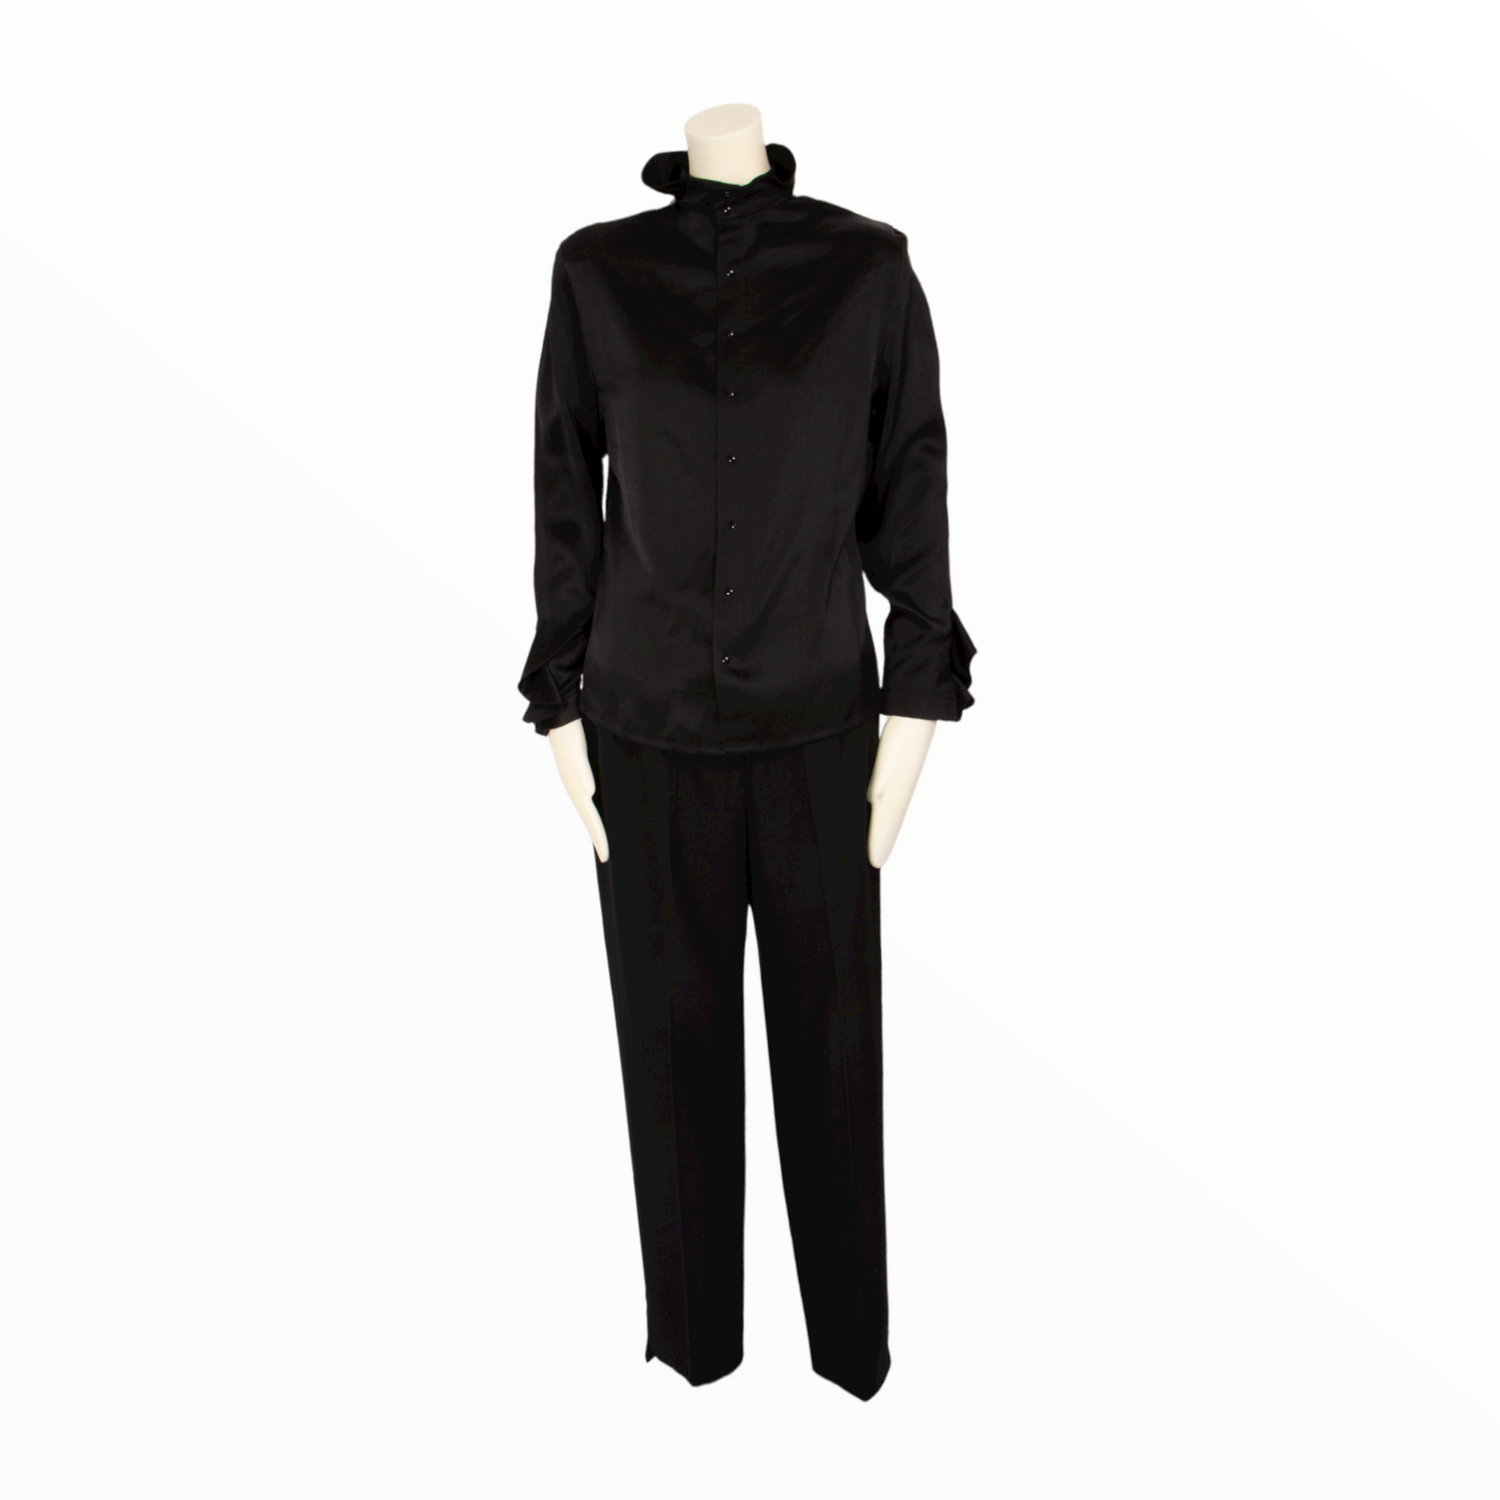 Thierry Mugler vintage black ruffled silk blouse - S - 1990s